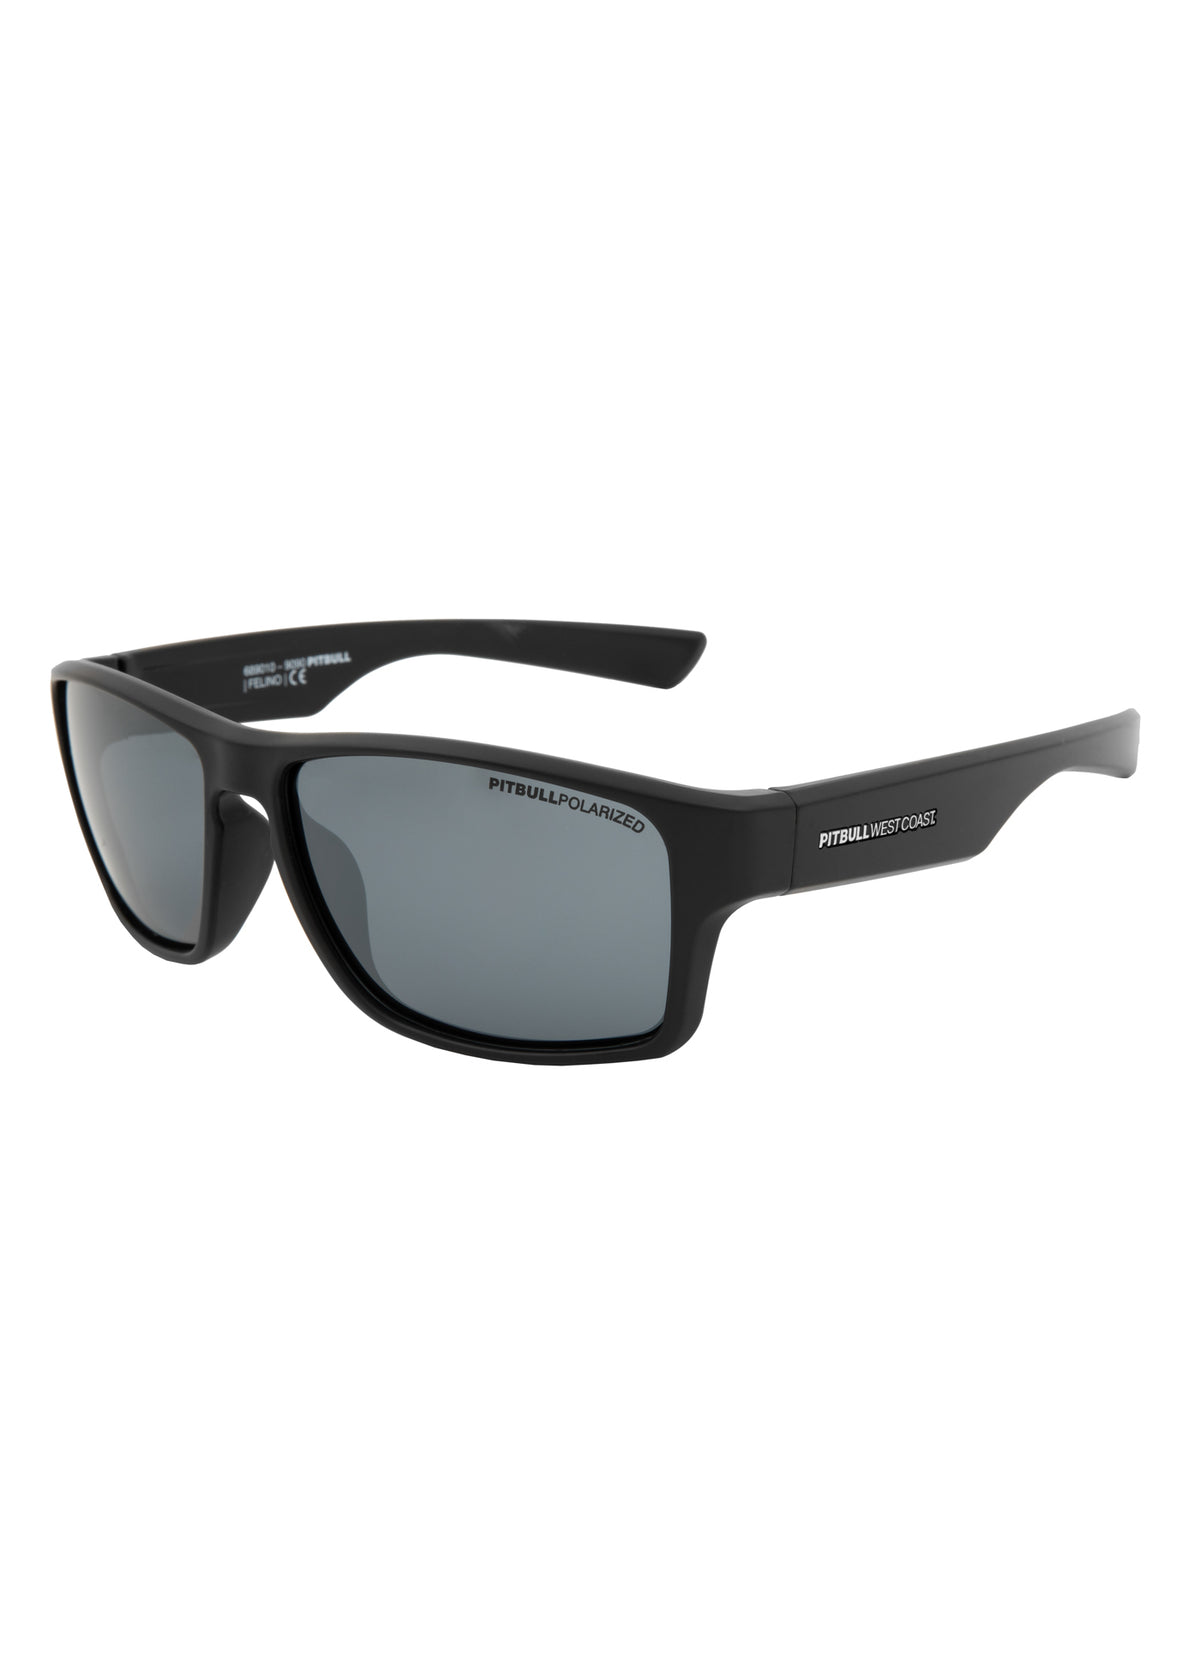 Sunglasses FELINO Black - Pitbull West Coast International Store 